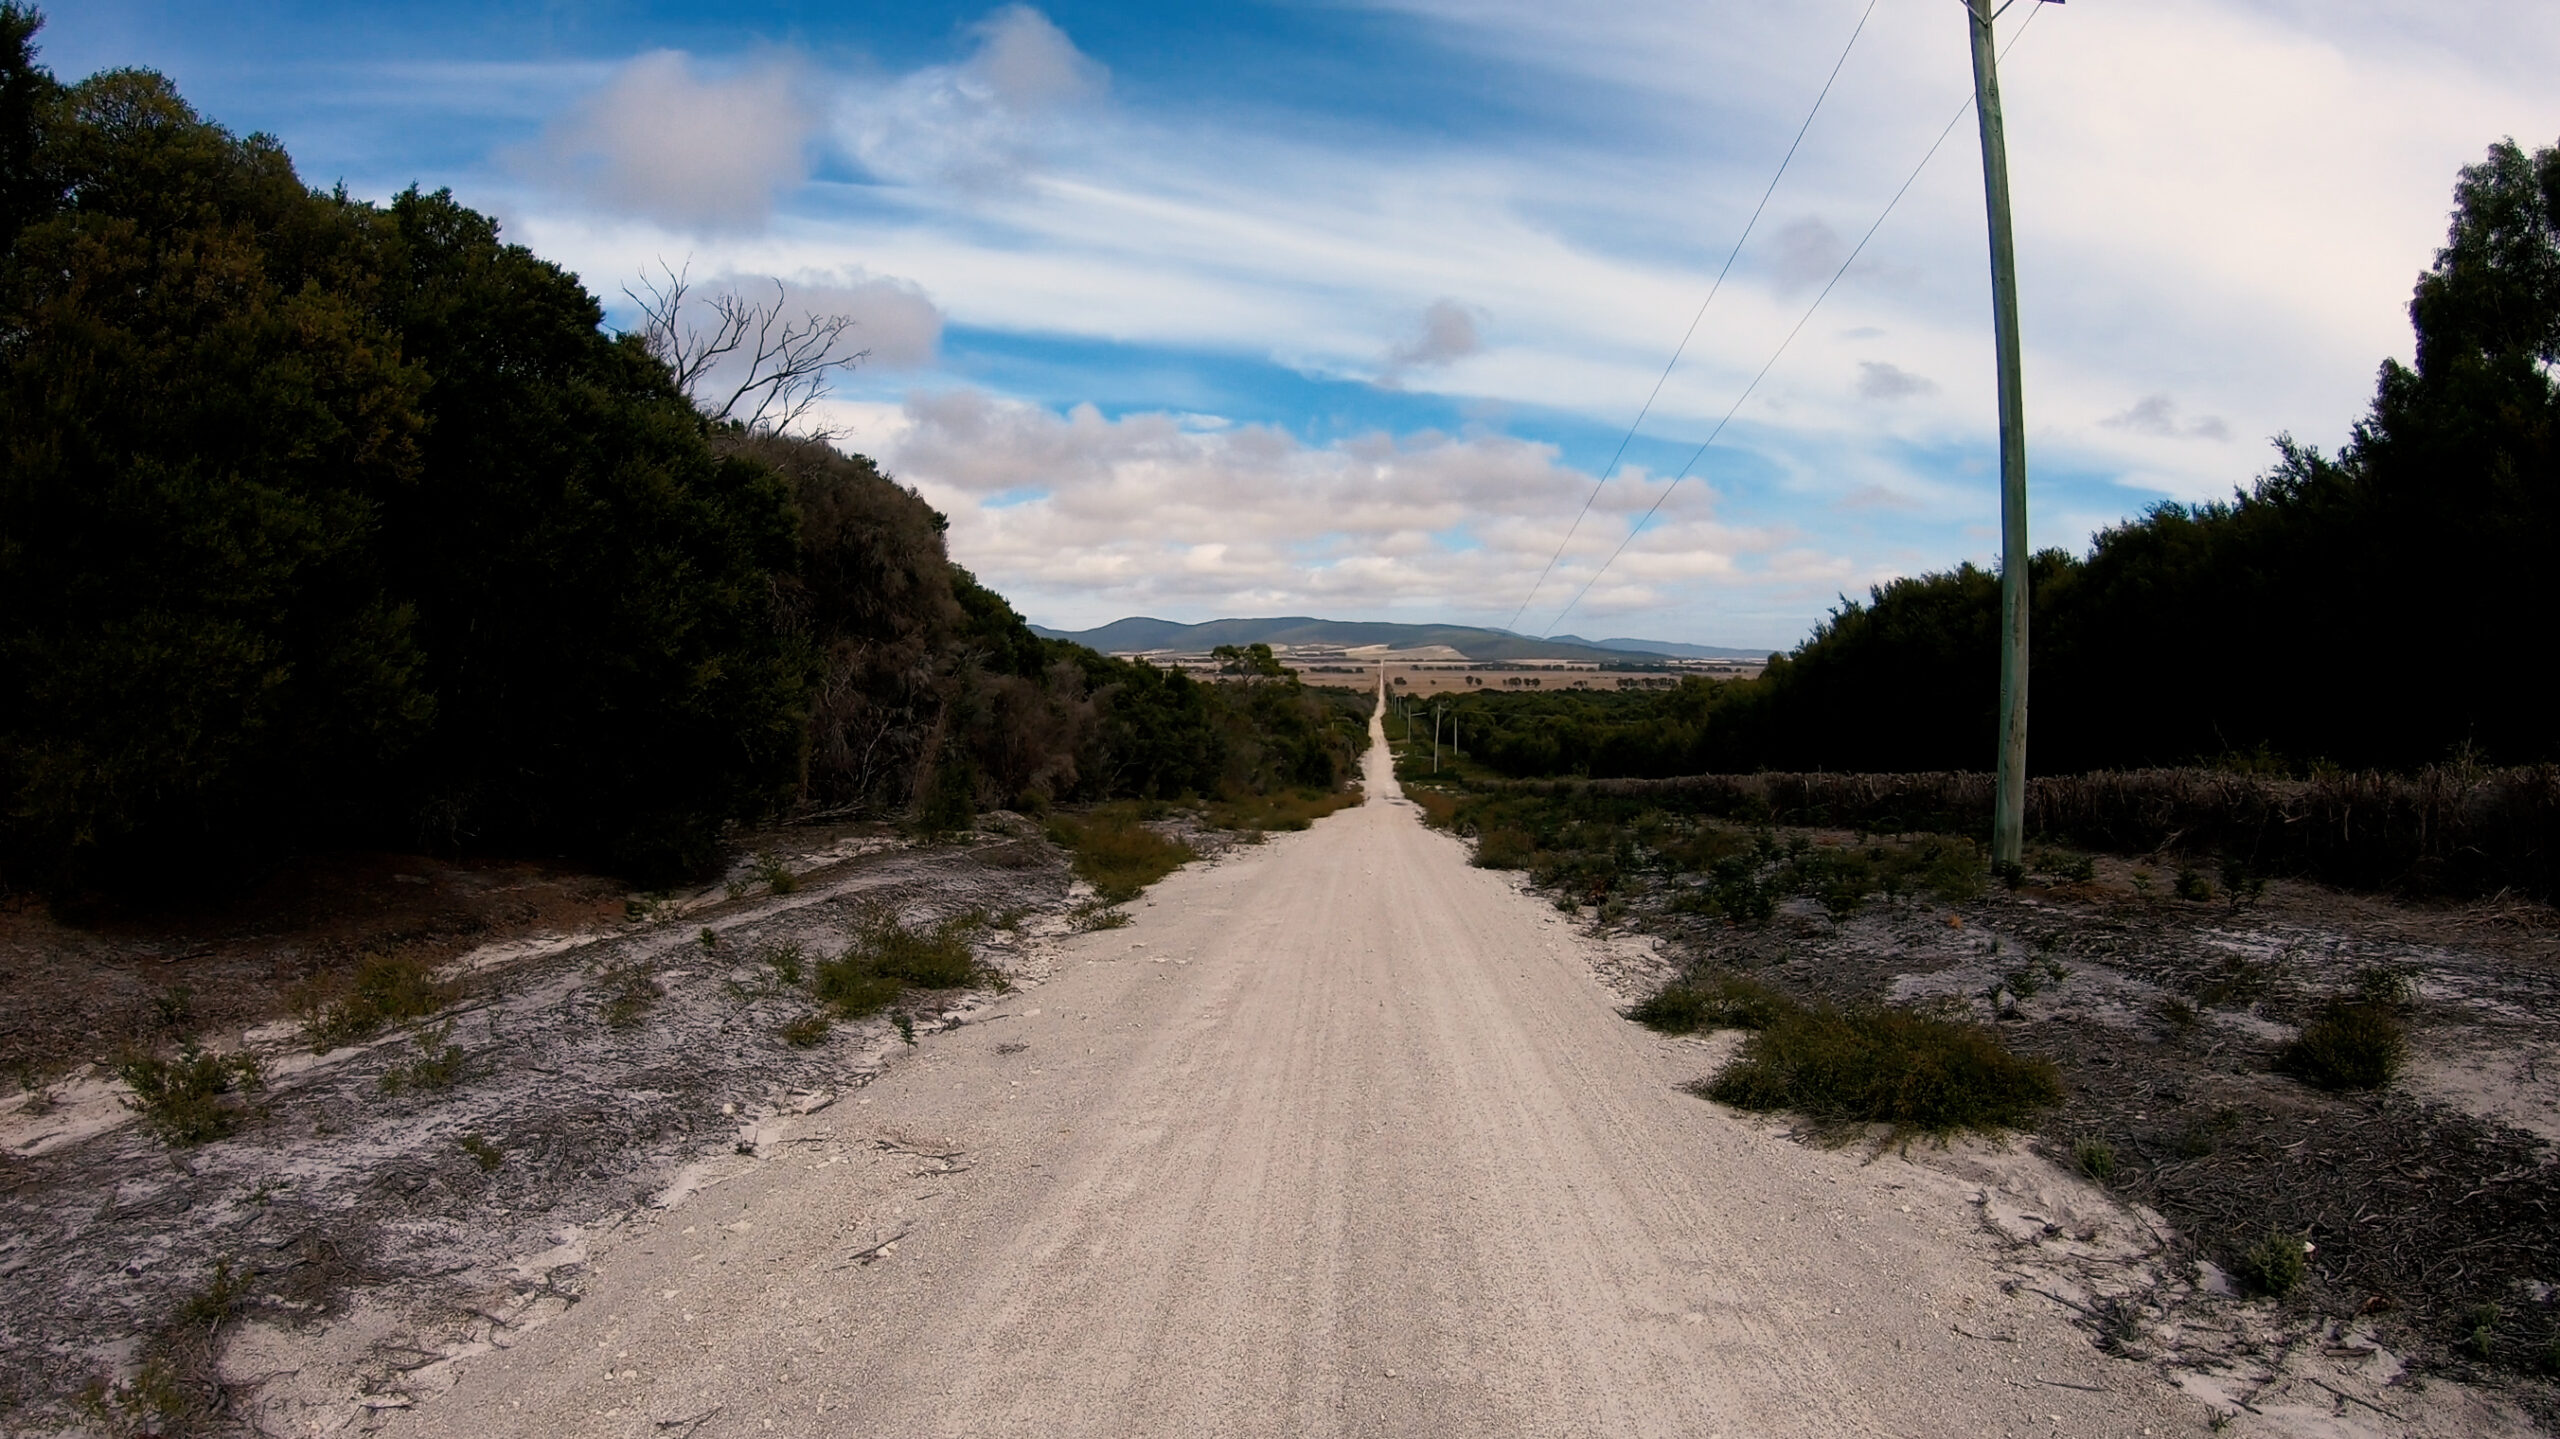 A road on Flinders Island - Drive carefully!